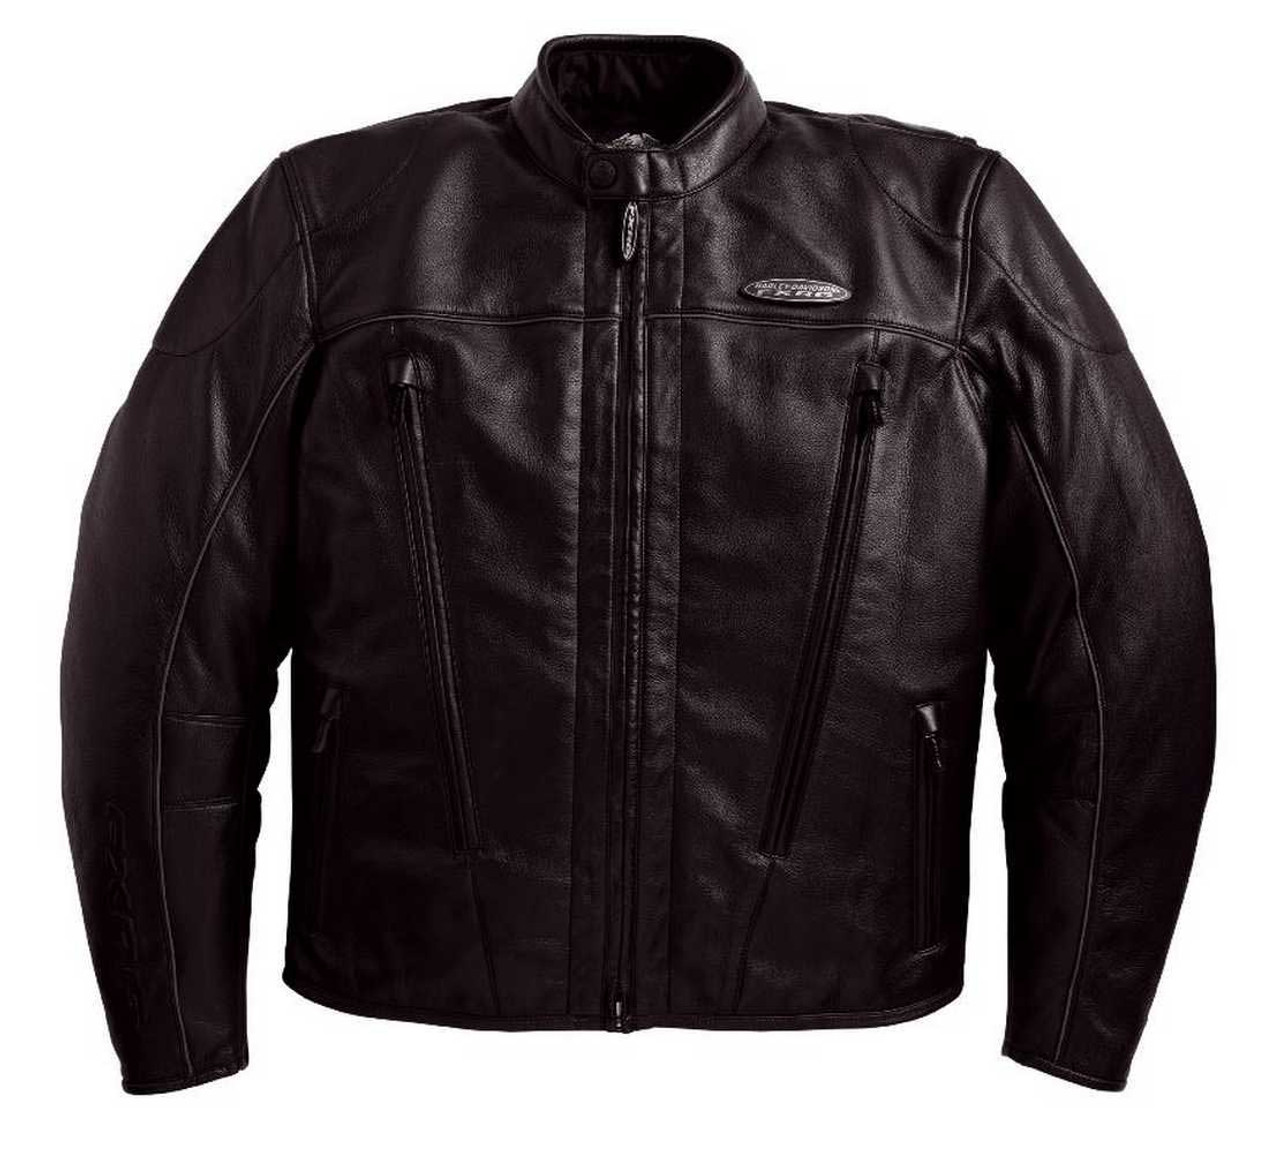 Harley Davidson FXRG Motorcycle Leather Jacket Waterproof No Liner L  98518-09vm 